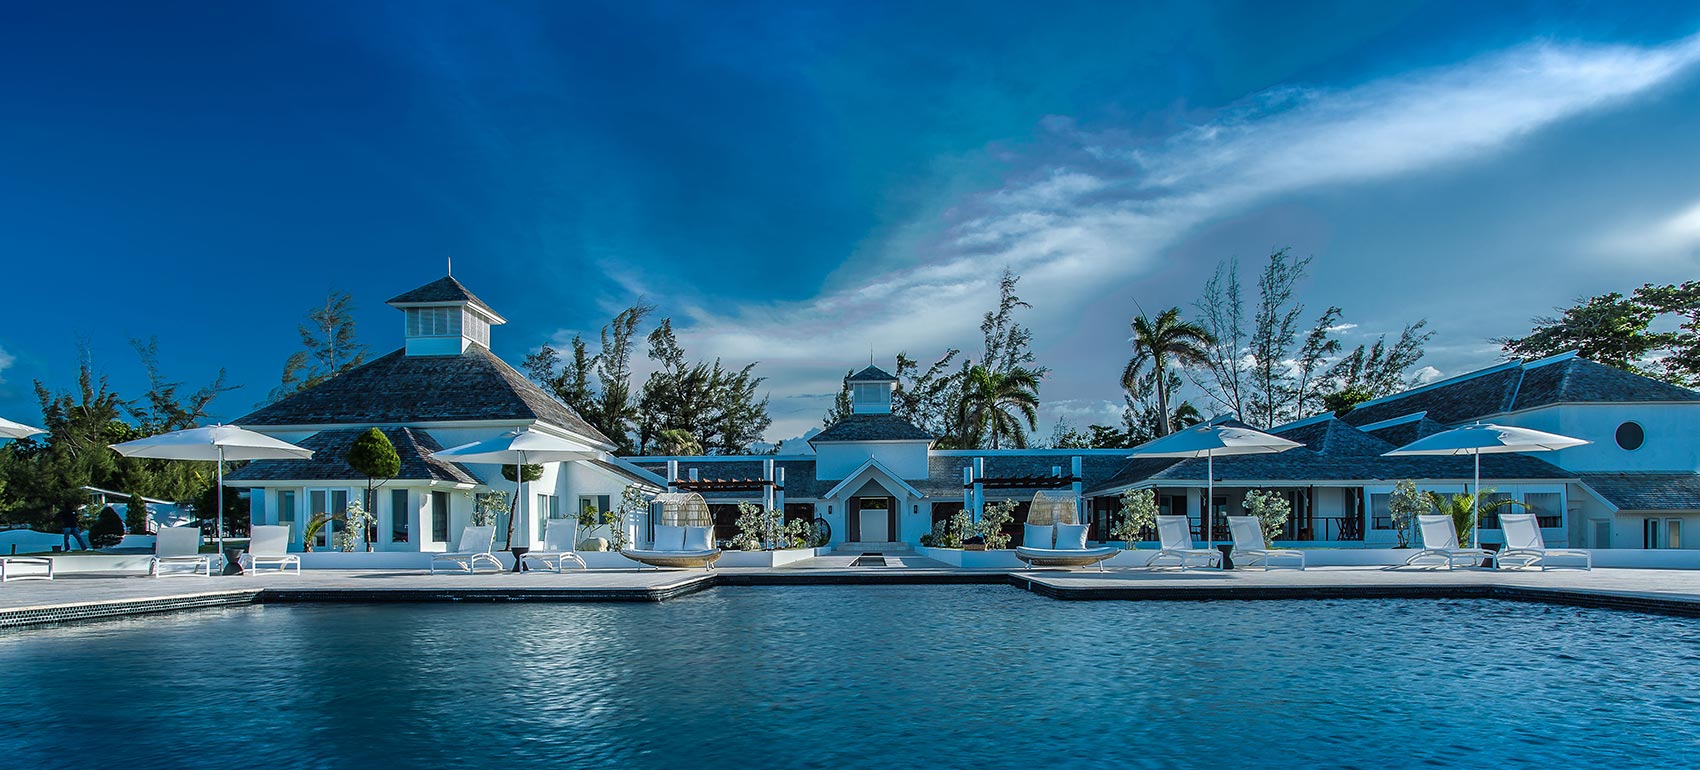 Caribtours | The Trident Hotel, Jamaica holidays